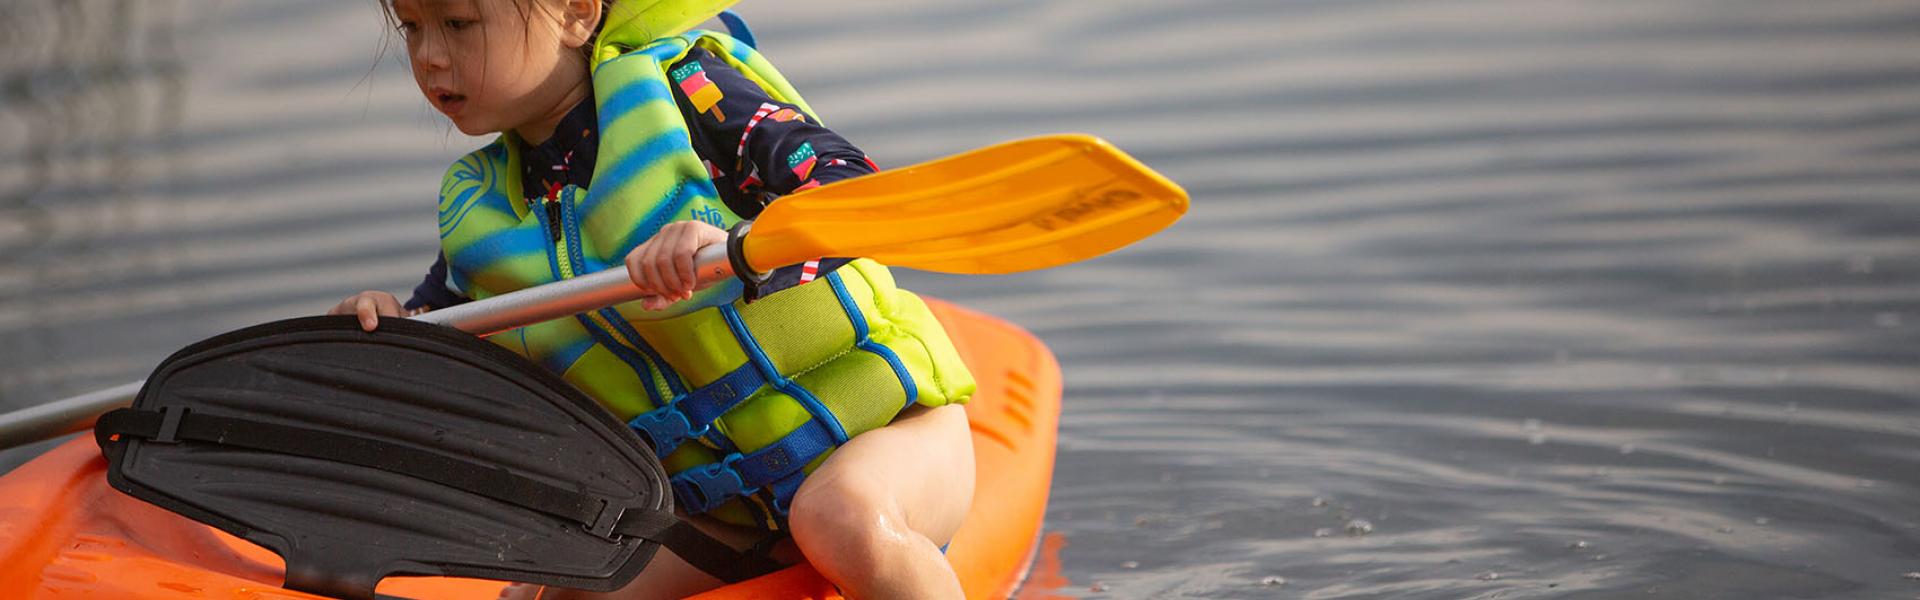 little girl in kayak on lake